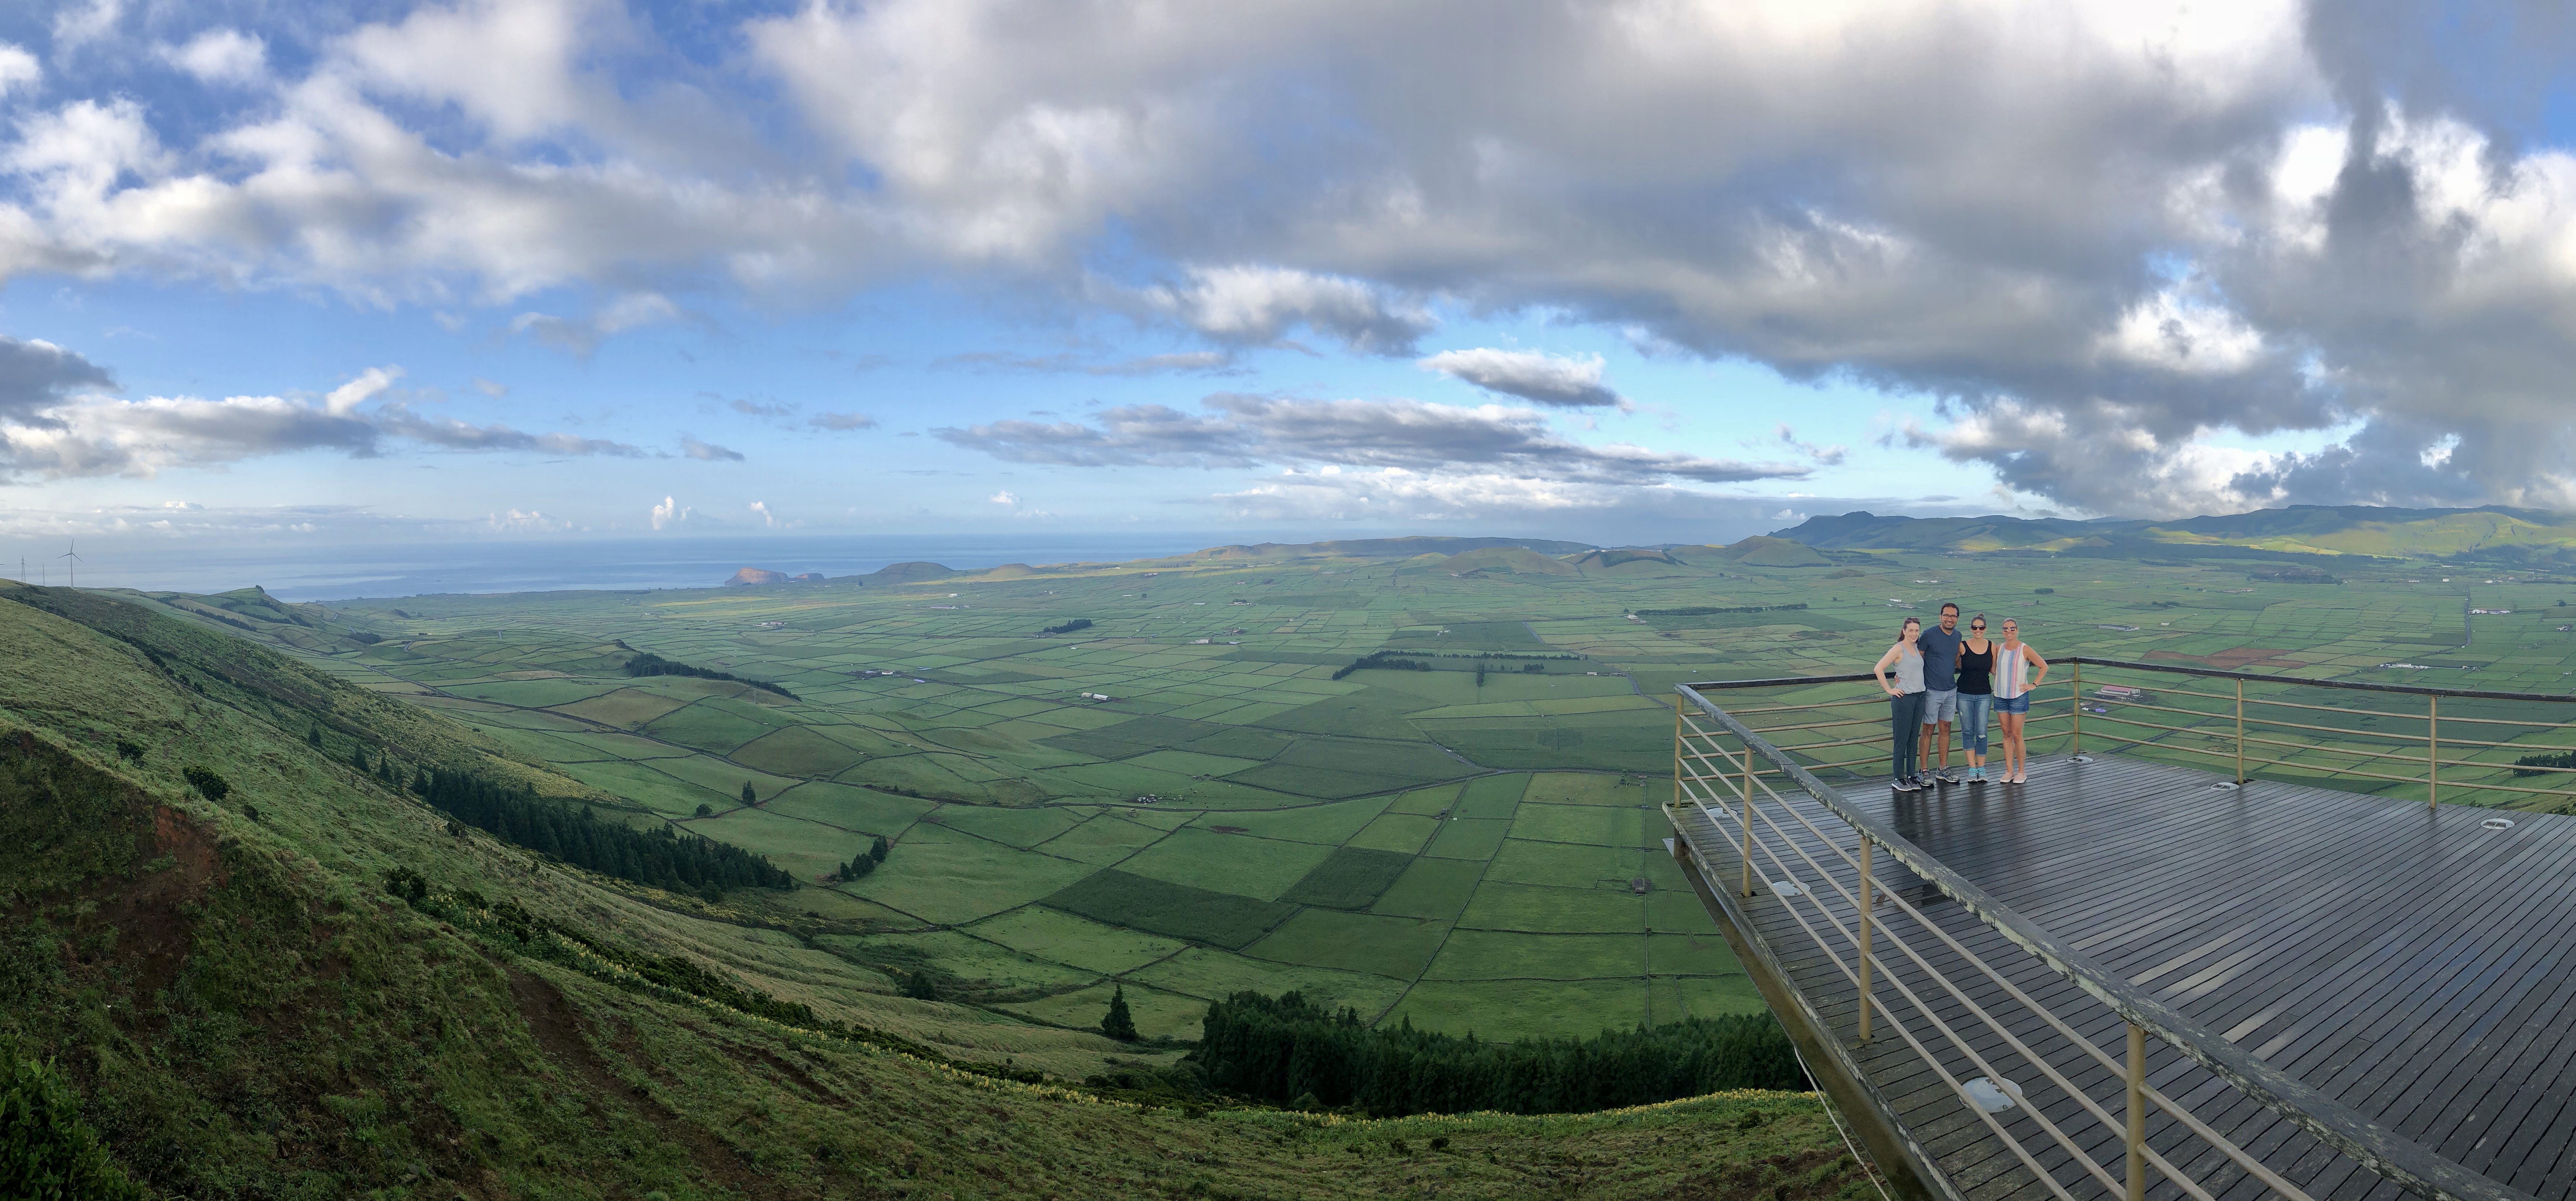 Serra do Cume Viewpoint on Terceira Island